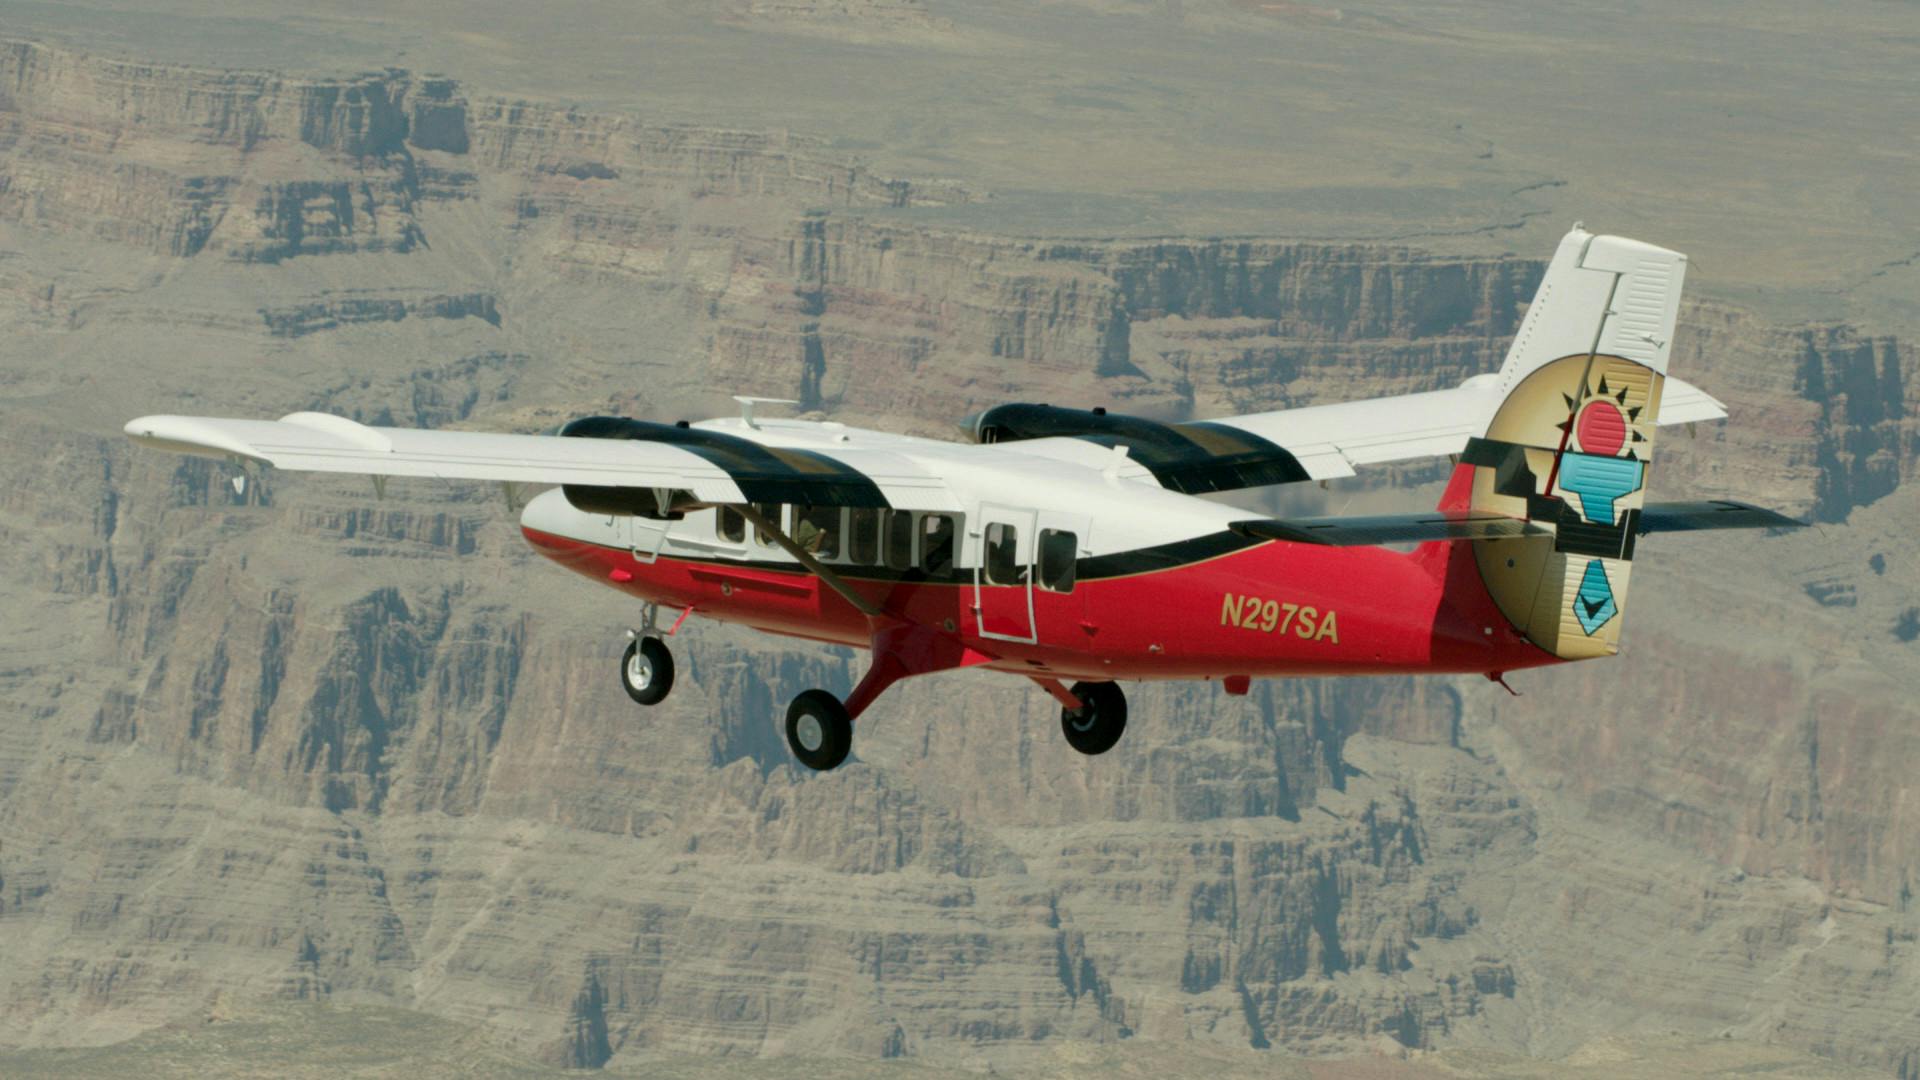 Grand Canyon North lucht- en grondtour met ATV vanuit Las Vegas